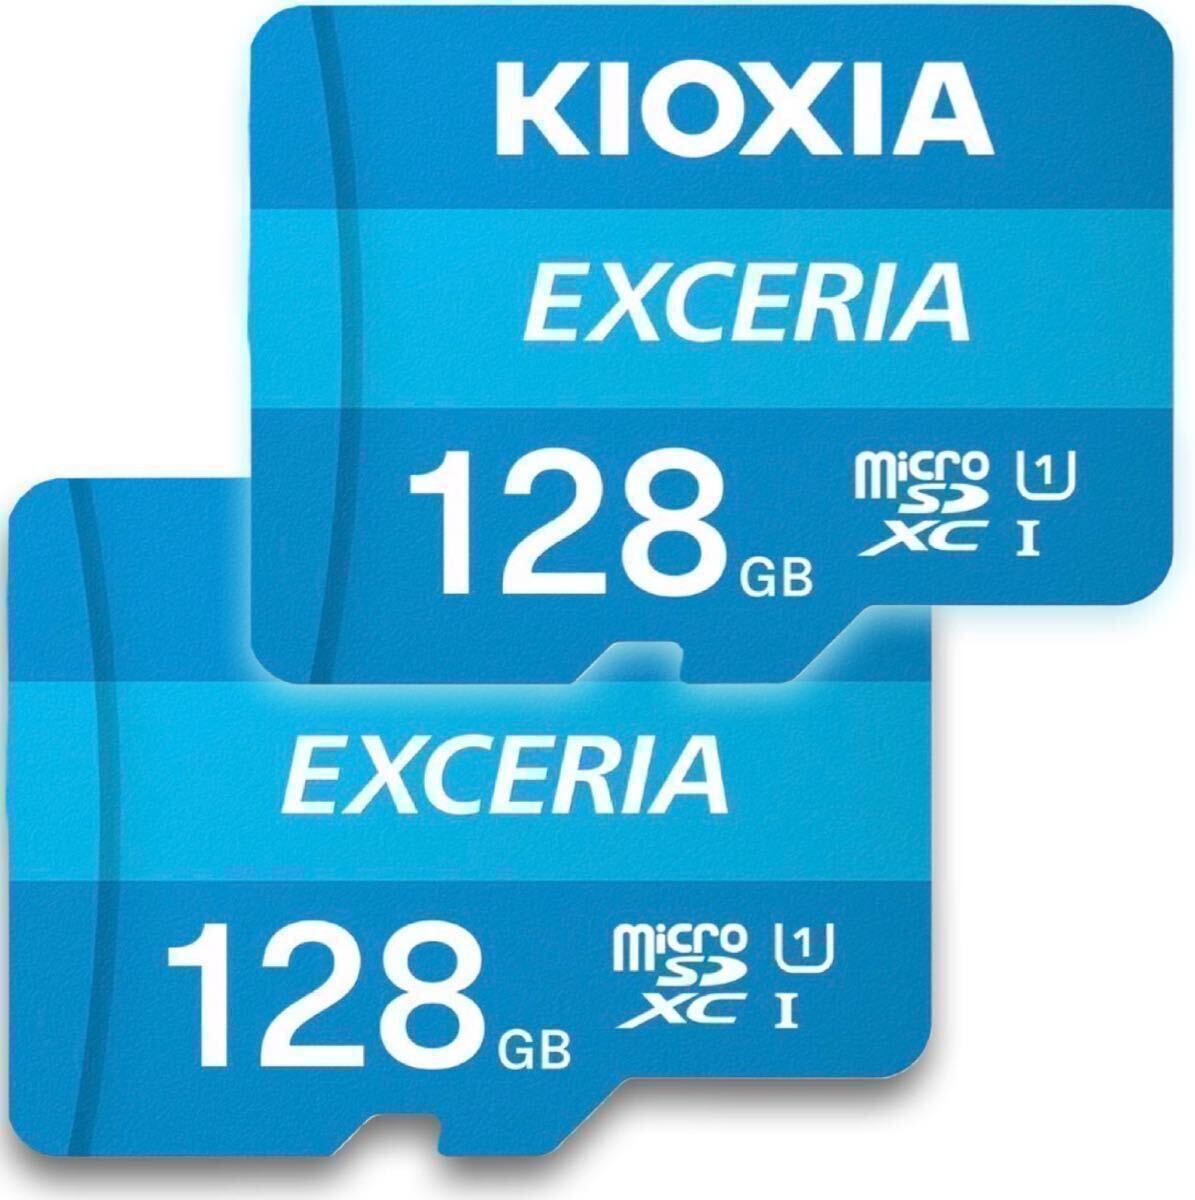 microSD микро SD карта 128GBki ok sia2 листов 